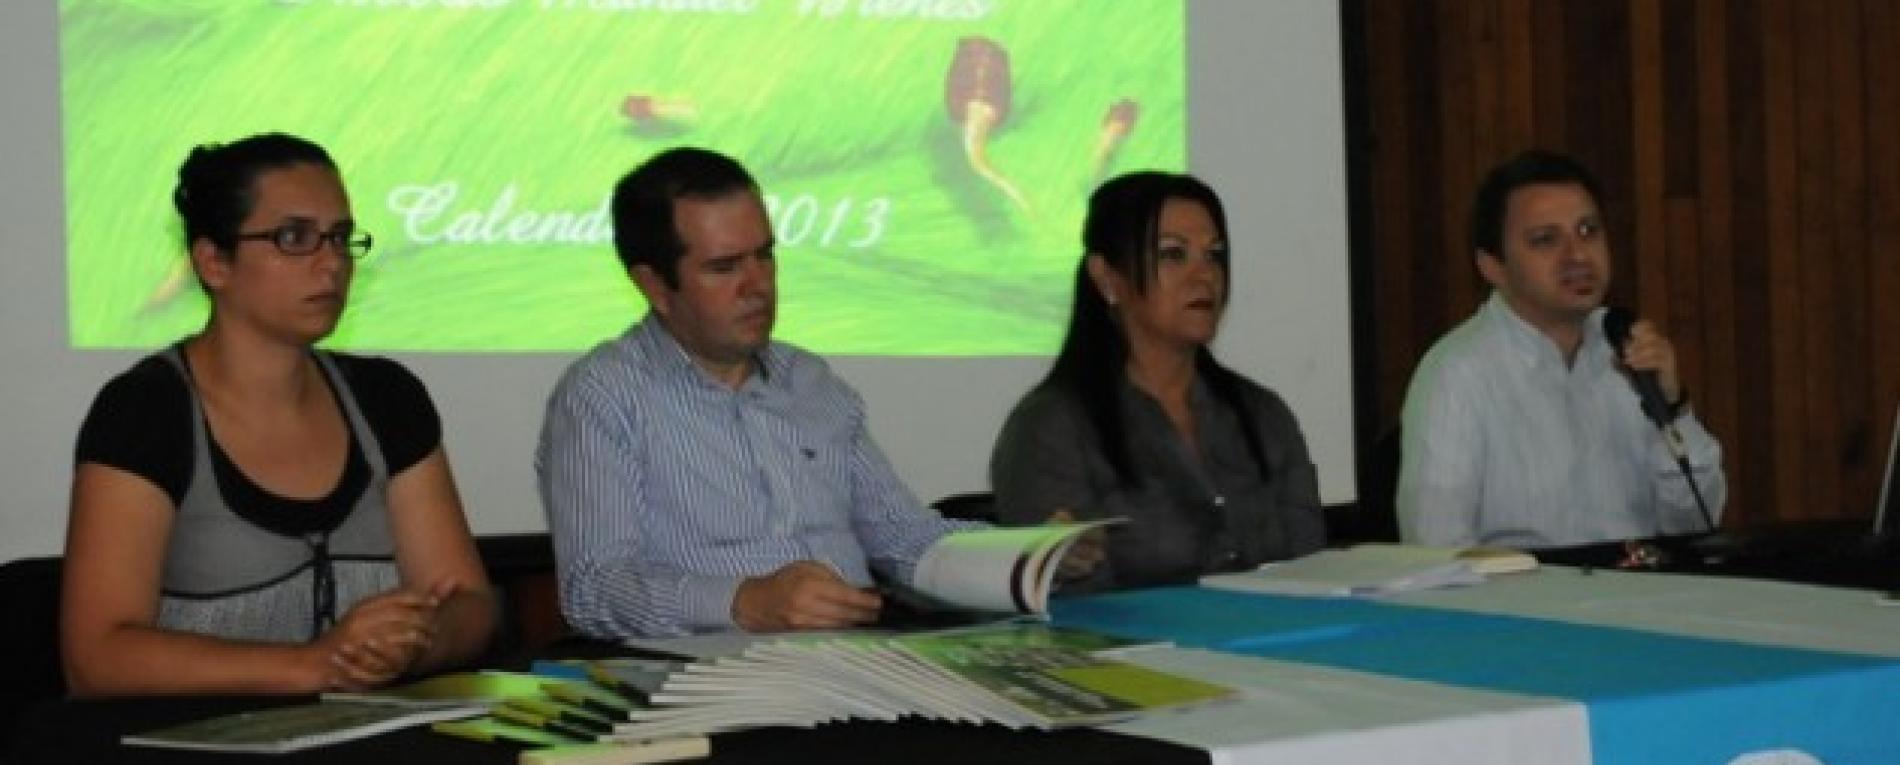 Sede presentó calendario 2013 y catálogo de Acción Social